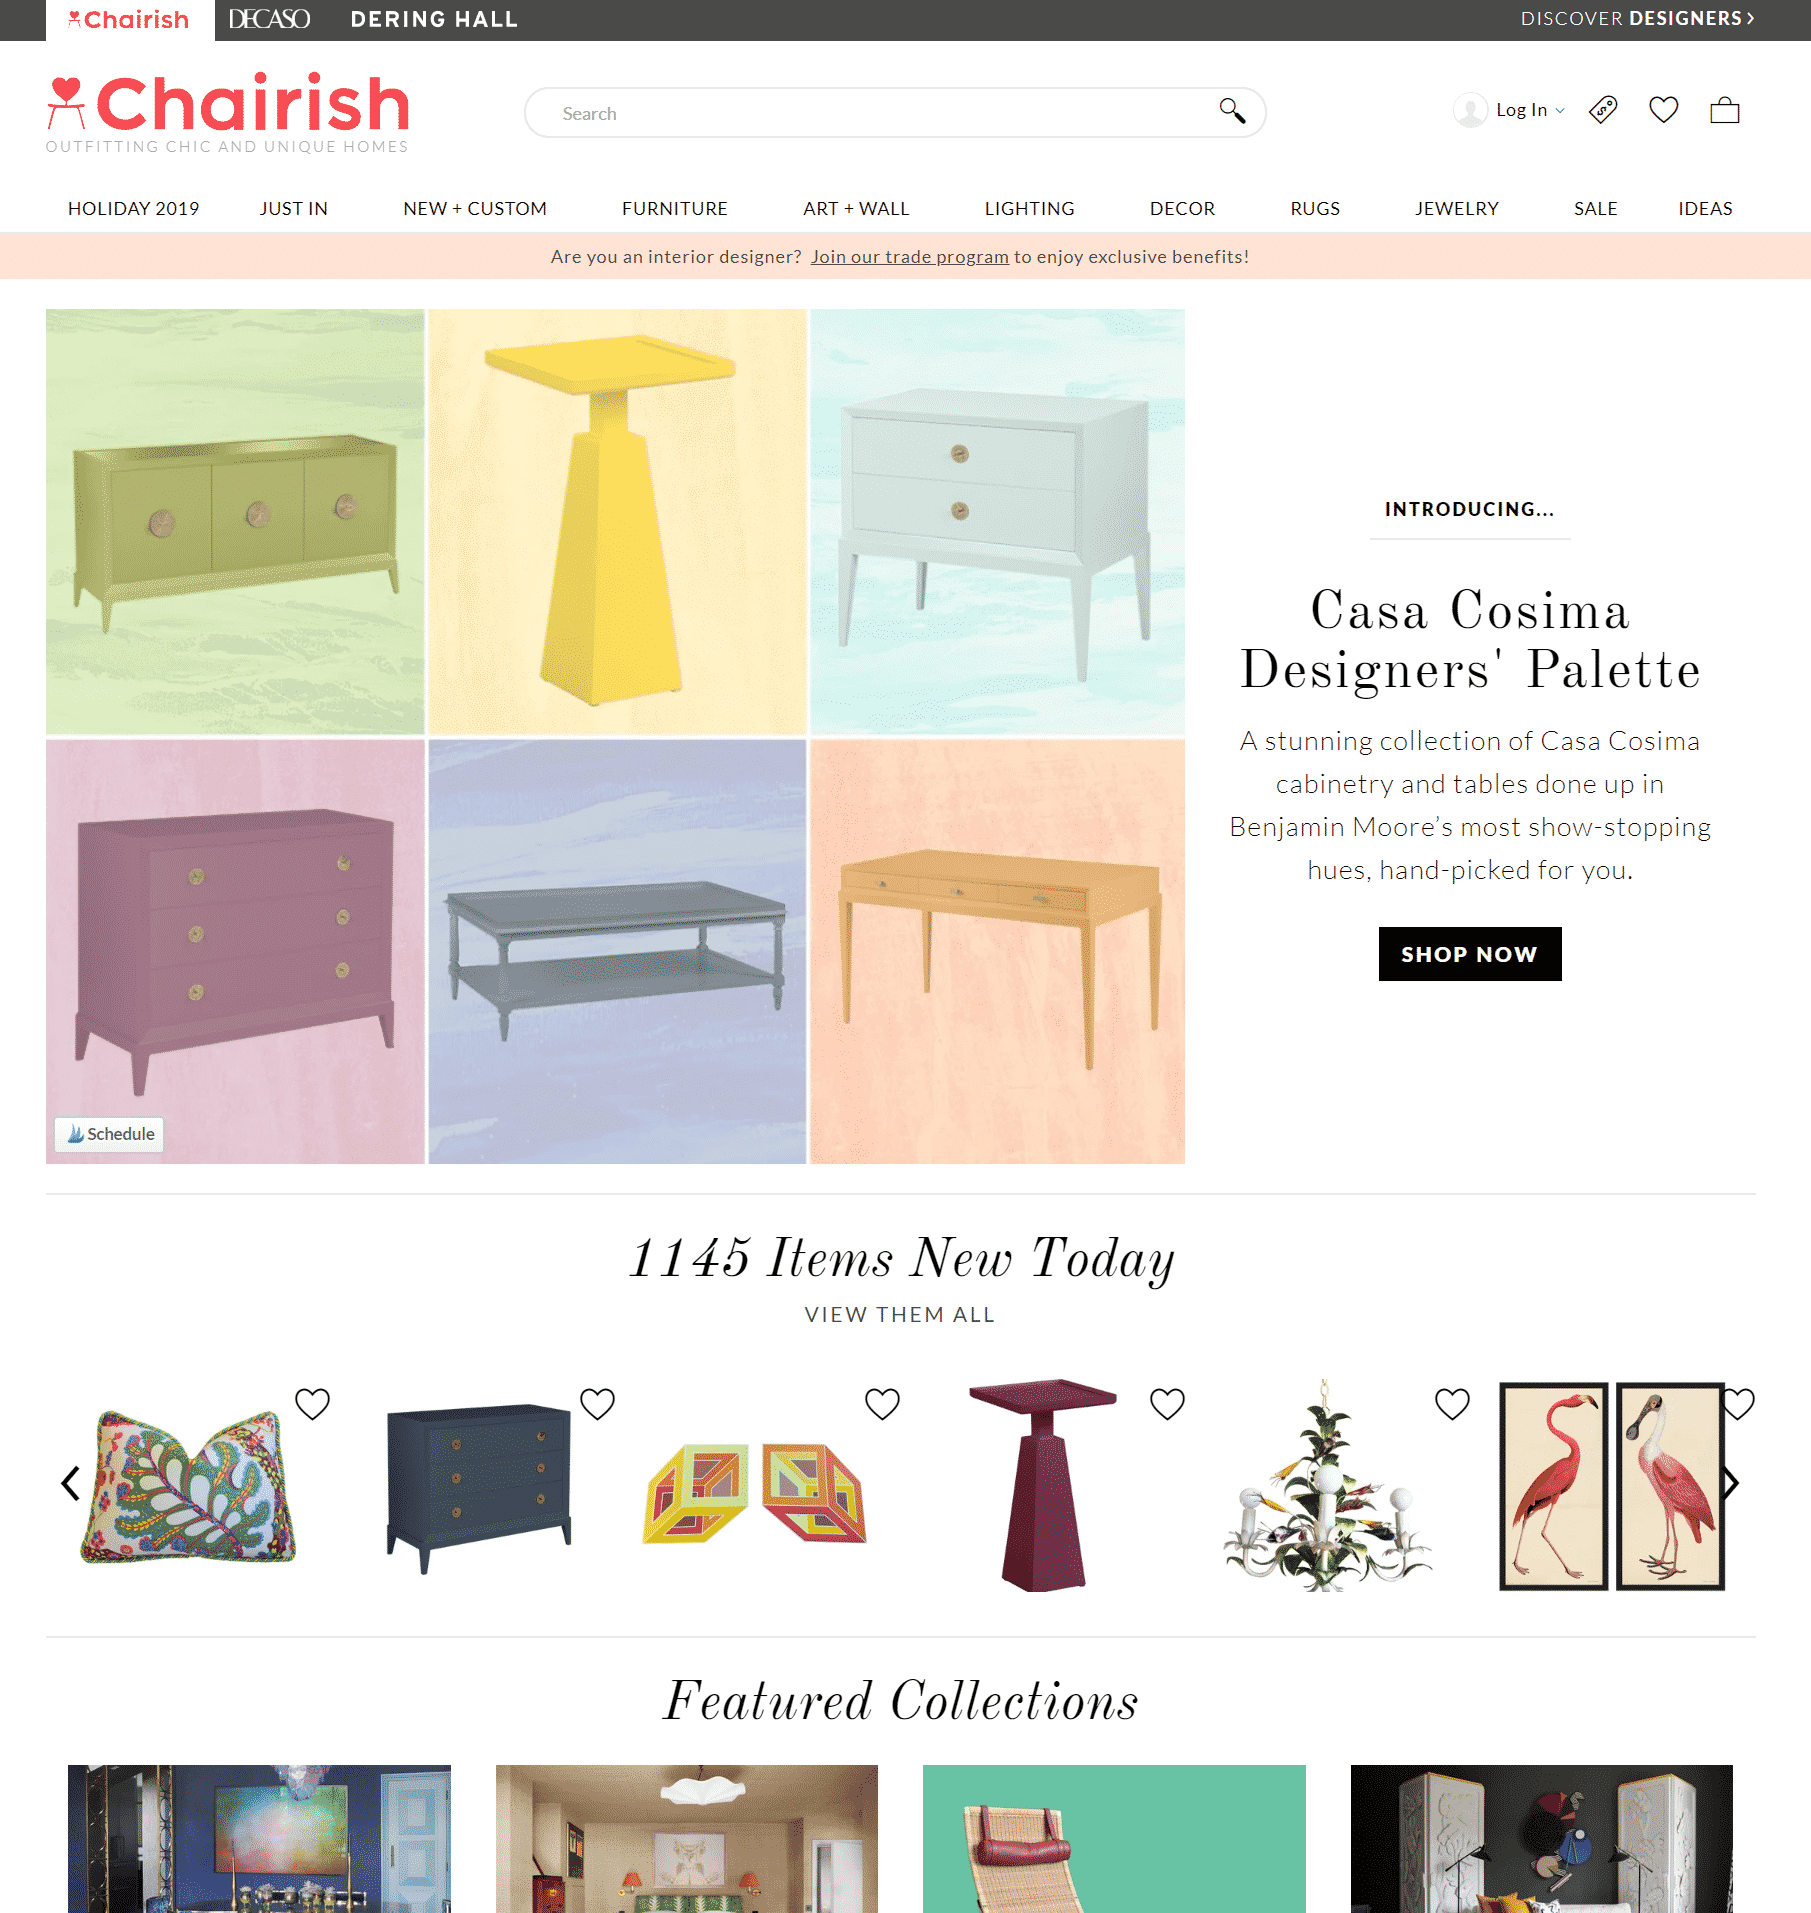 Chairish shopping on the internet